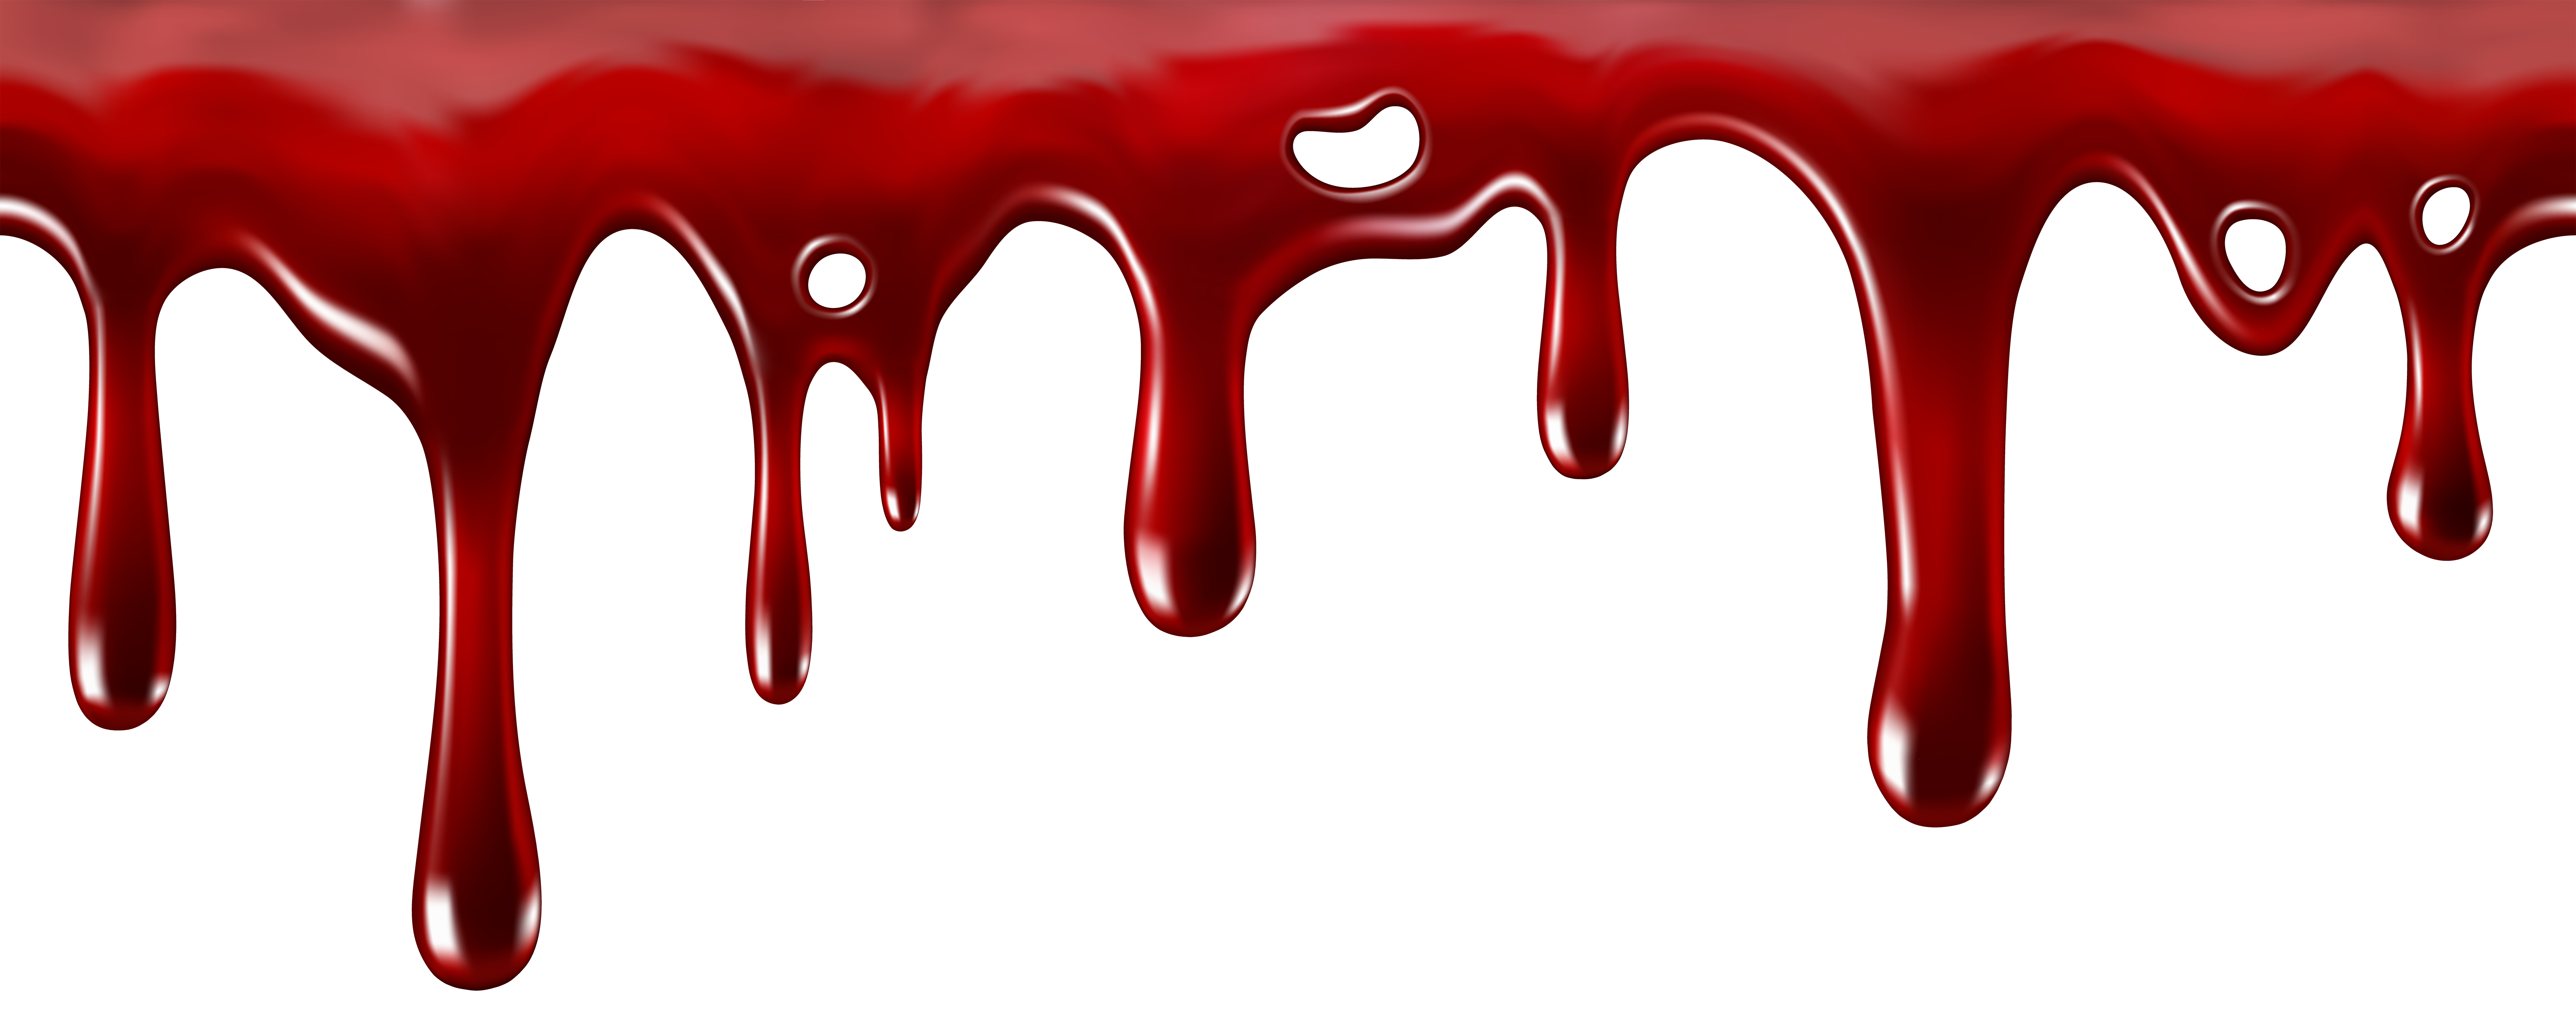 Decor transparent clip art. Blood dripping png